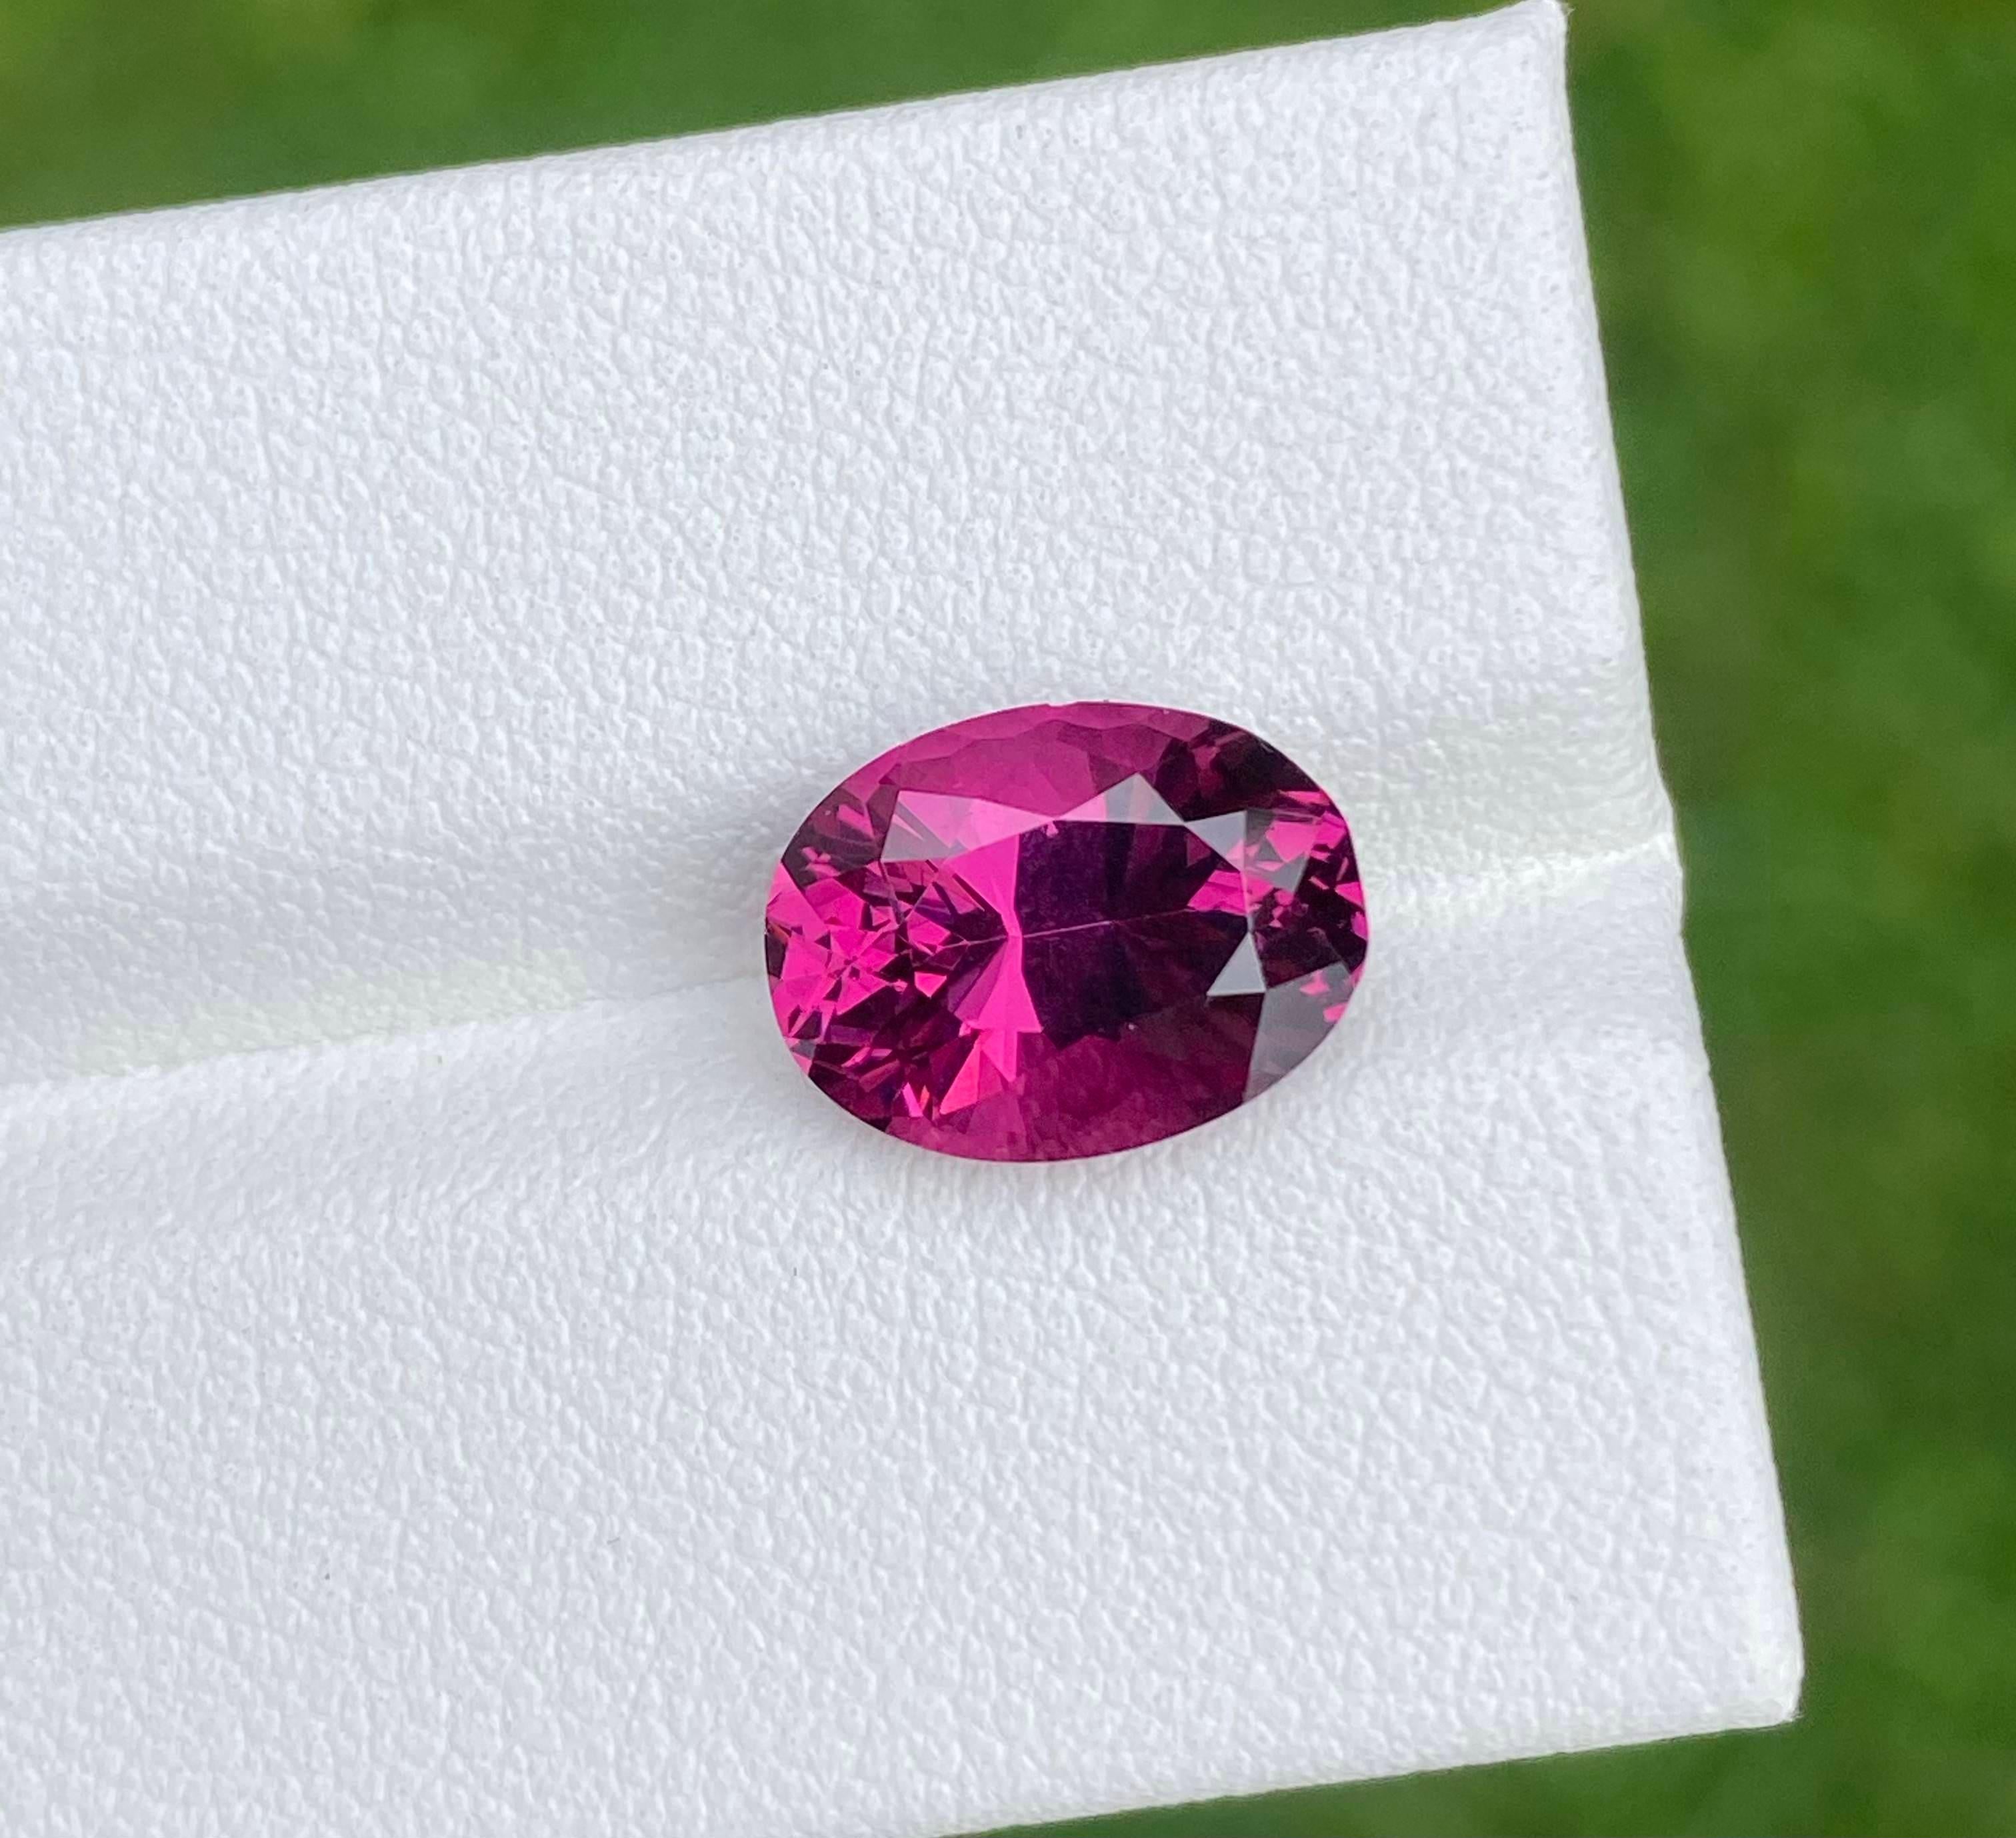 Oval Cut Pink Garnet Ring Gemstone 4.25 Carat Loose Gemstone Ceylon Origin For Sale